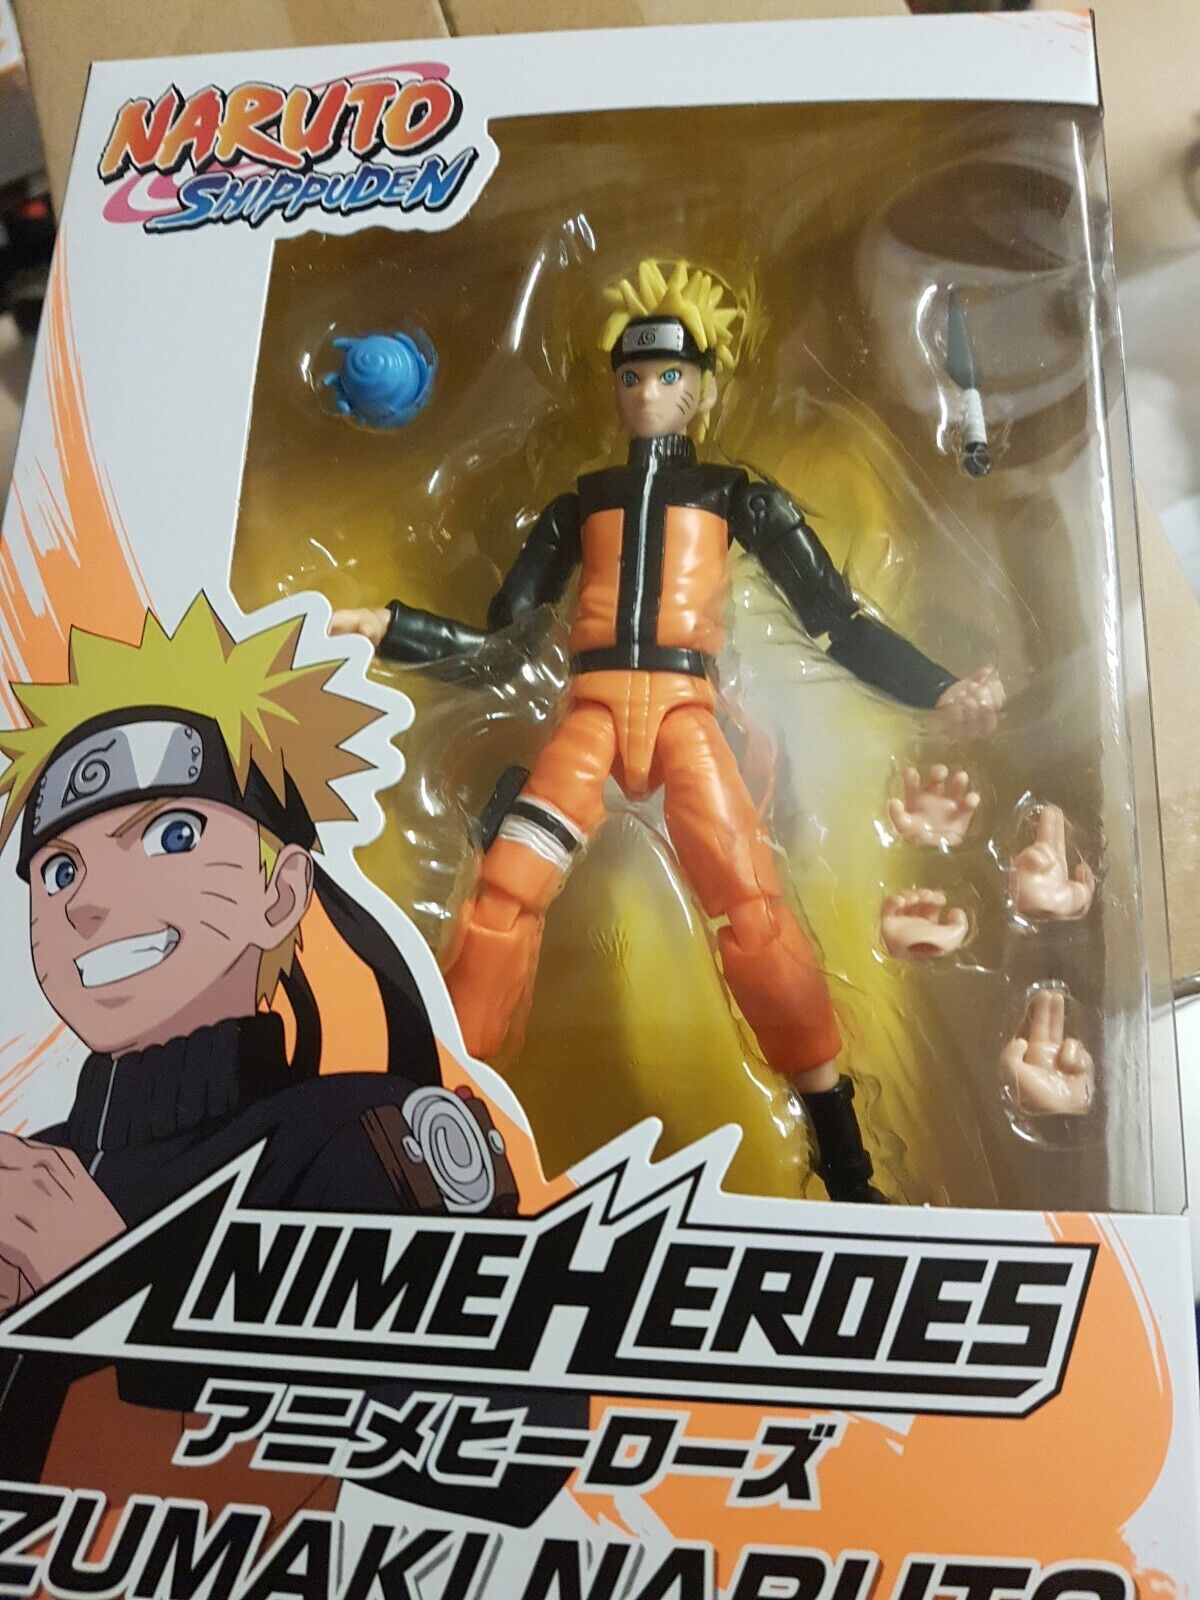 New Bandai Naruto Anime Heroes 15cm Action Figure - Uzumaki Naruto